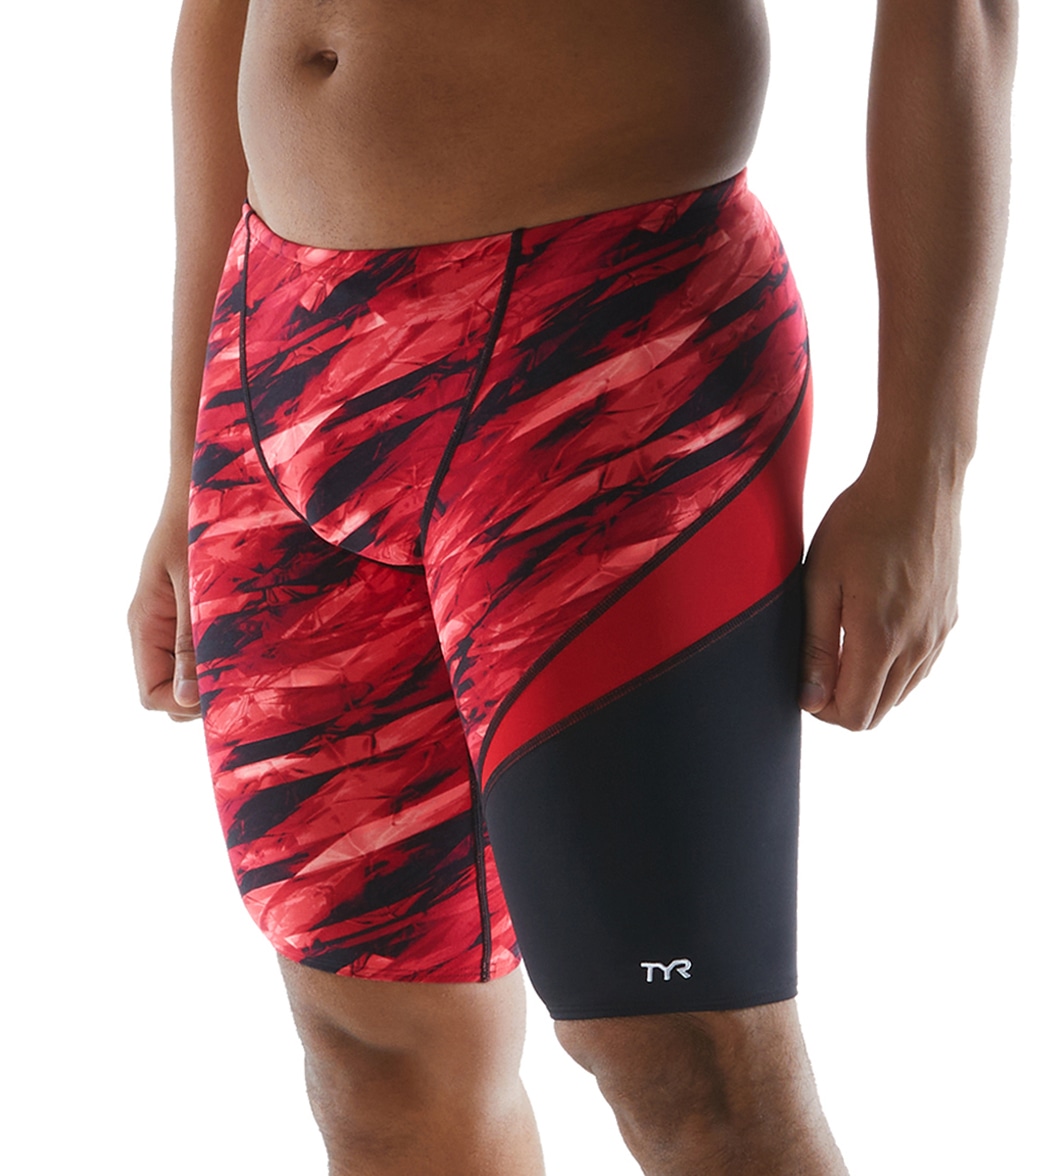 TYR Men's Vitric Jammer Swimsuit - Red 26 - Swimoutlet.com